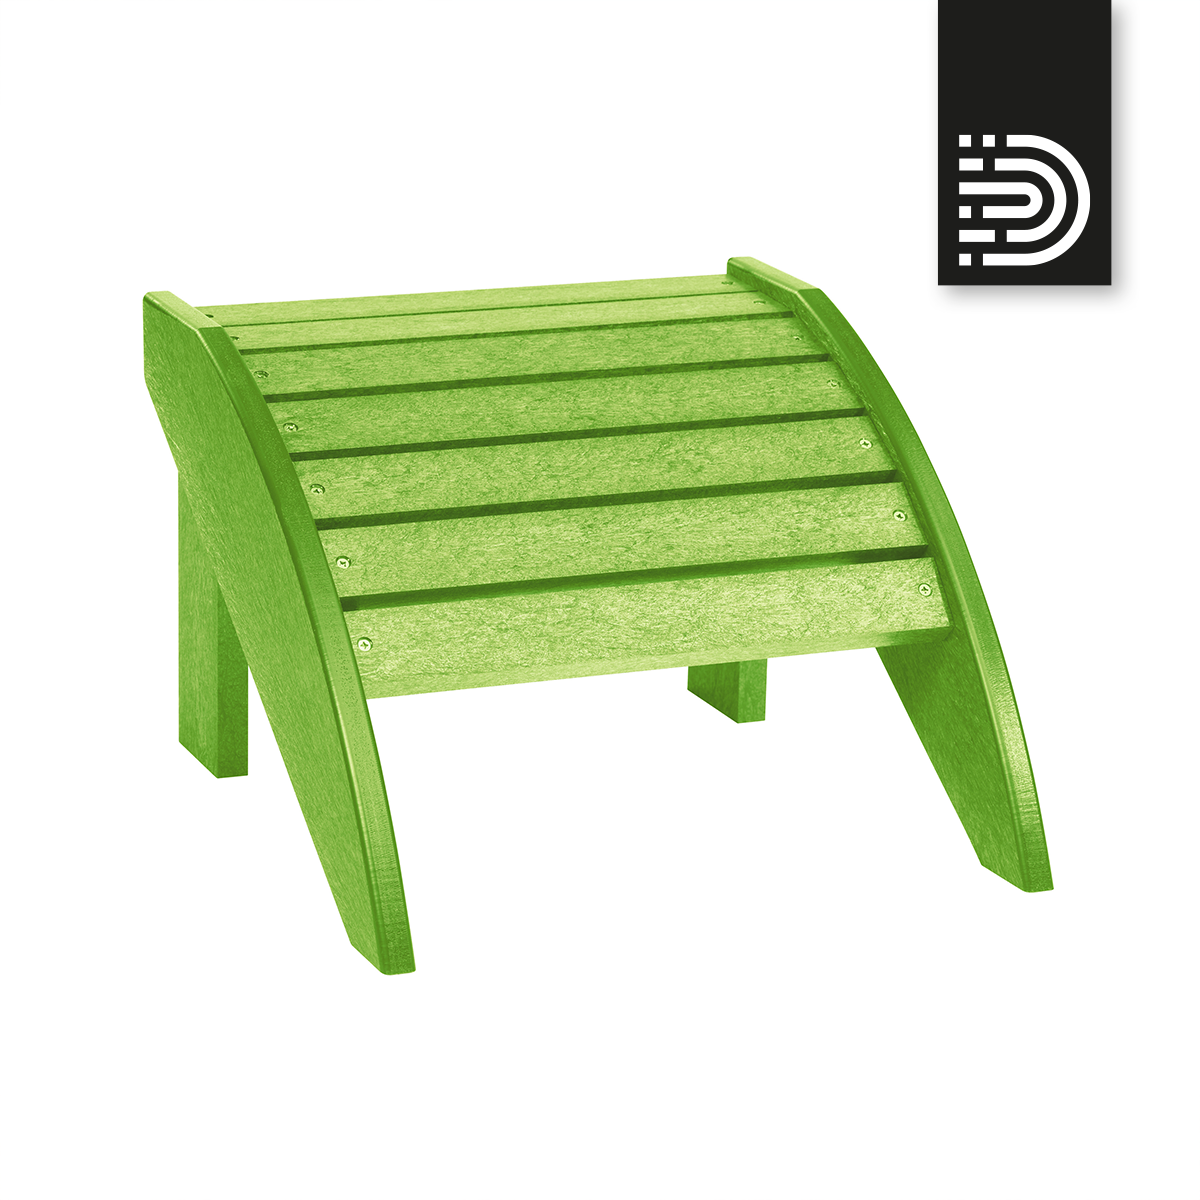 F01 Footstool - Kiwi green 17